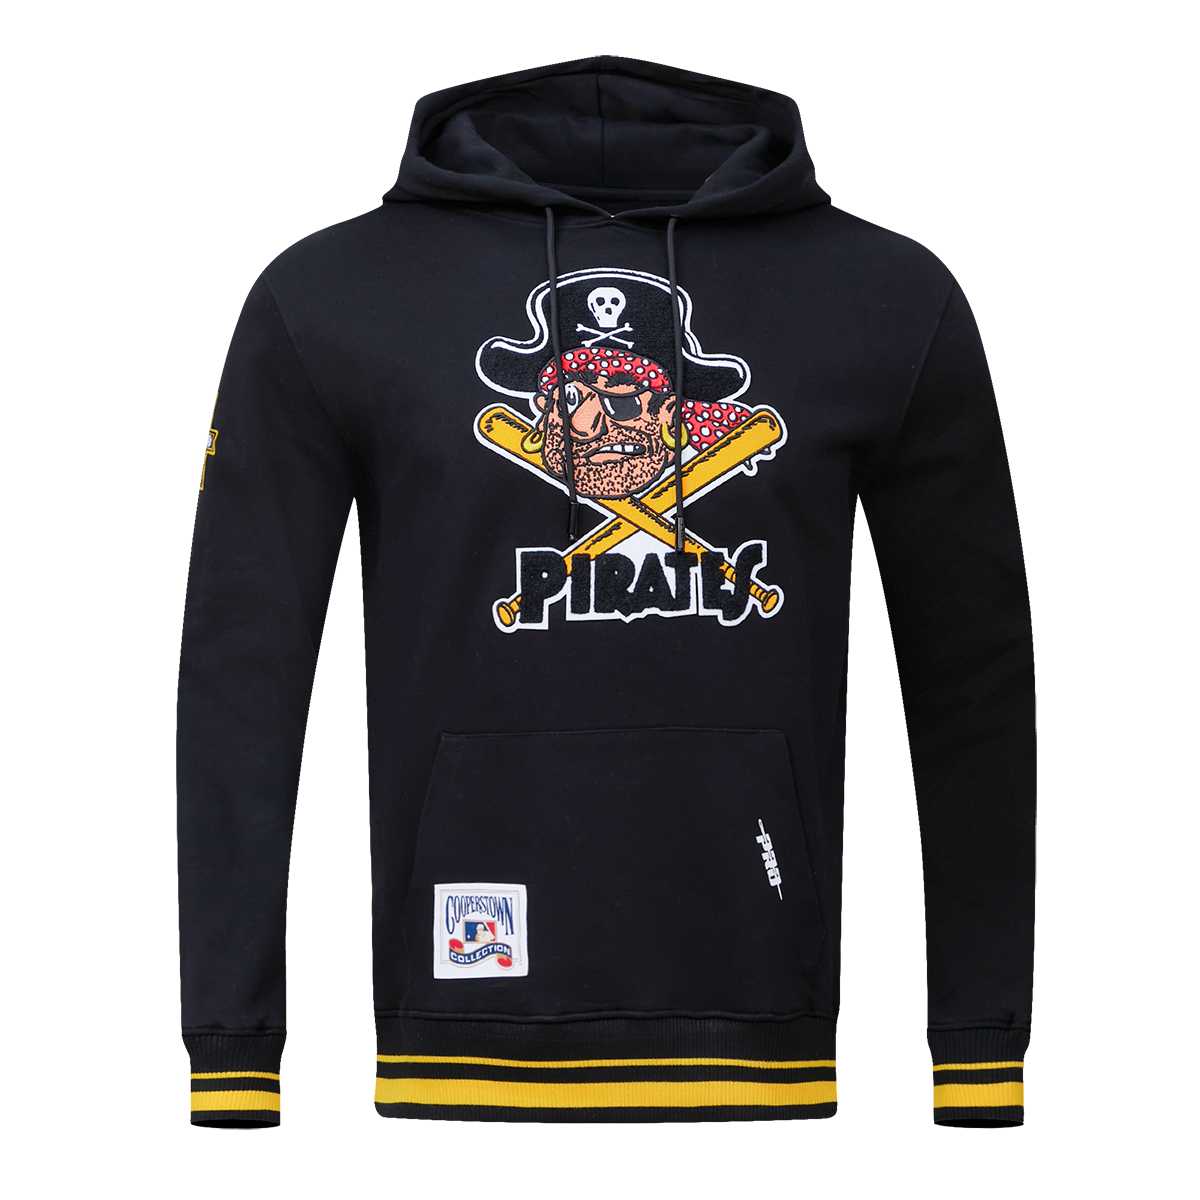 Pittsburgh Pirates National League retro logo T-shirt, hoodie